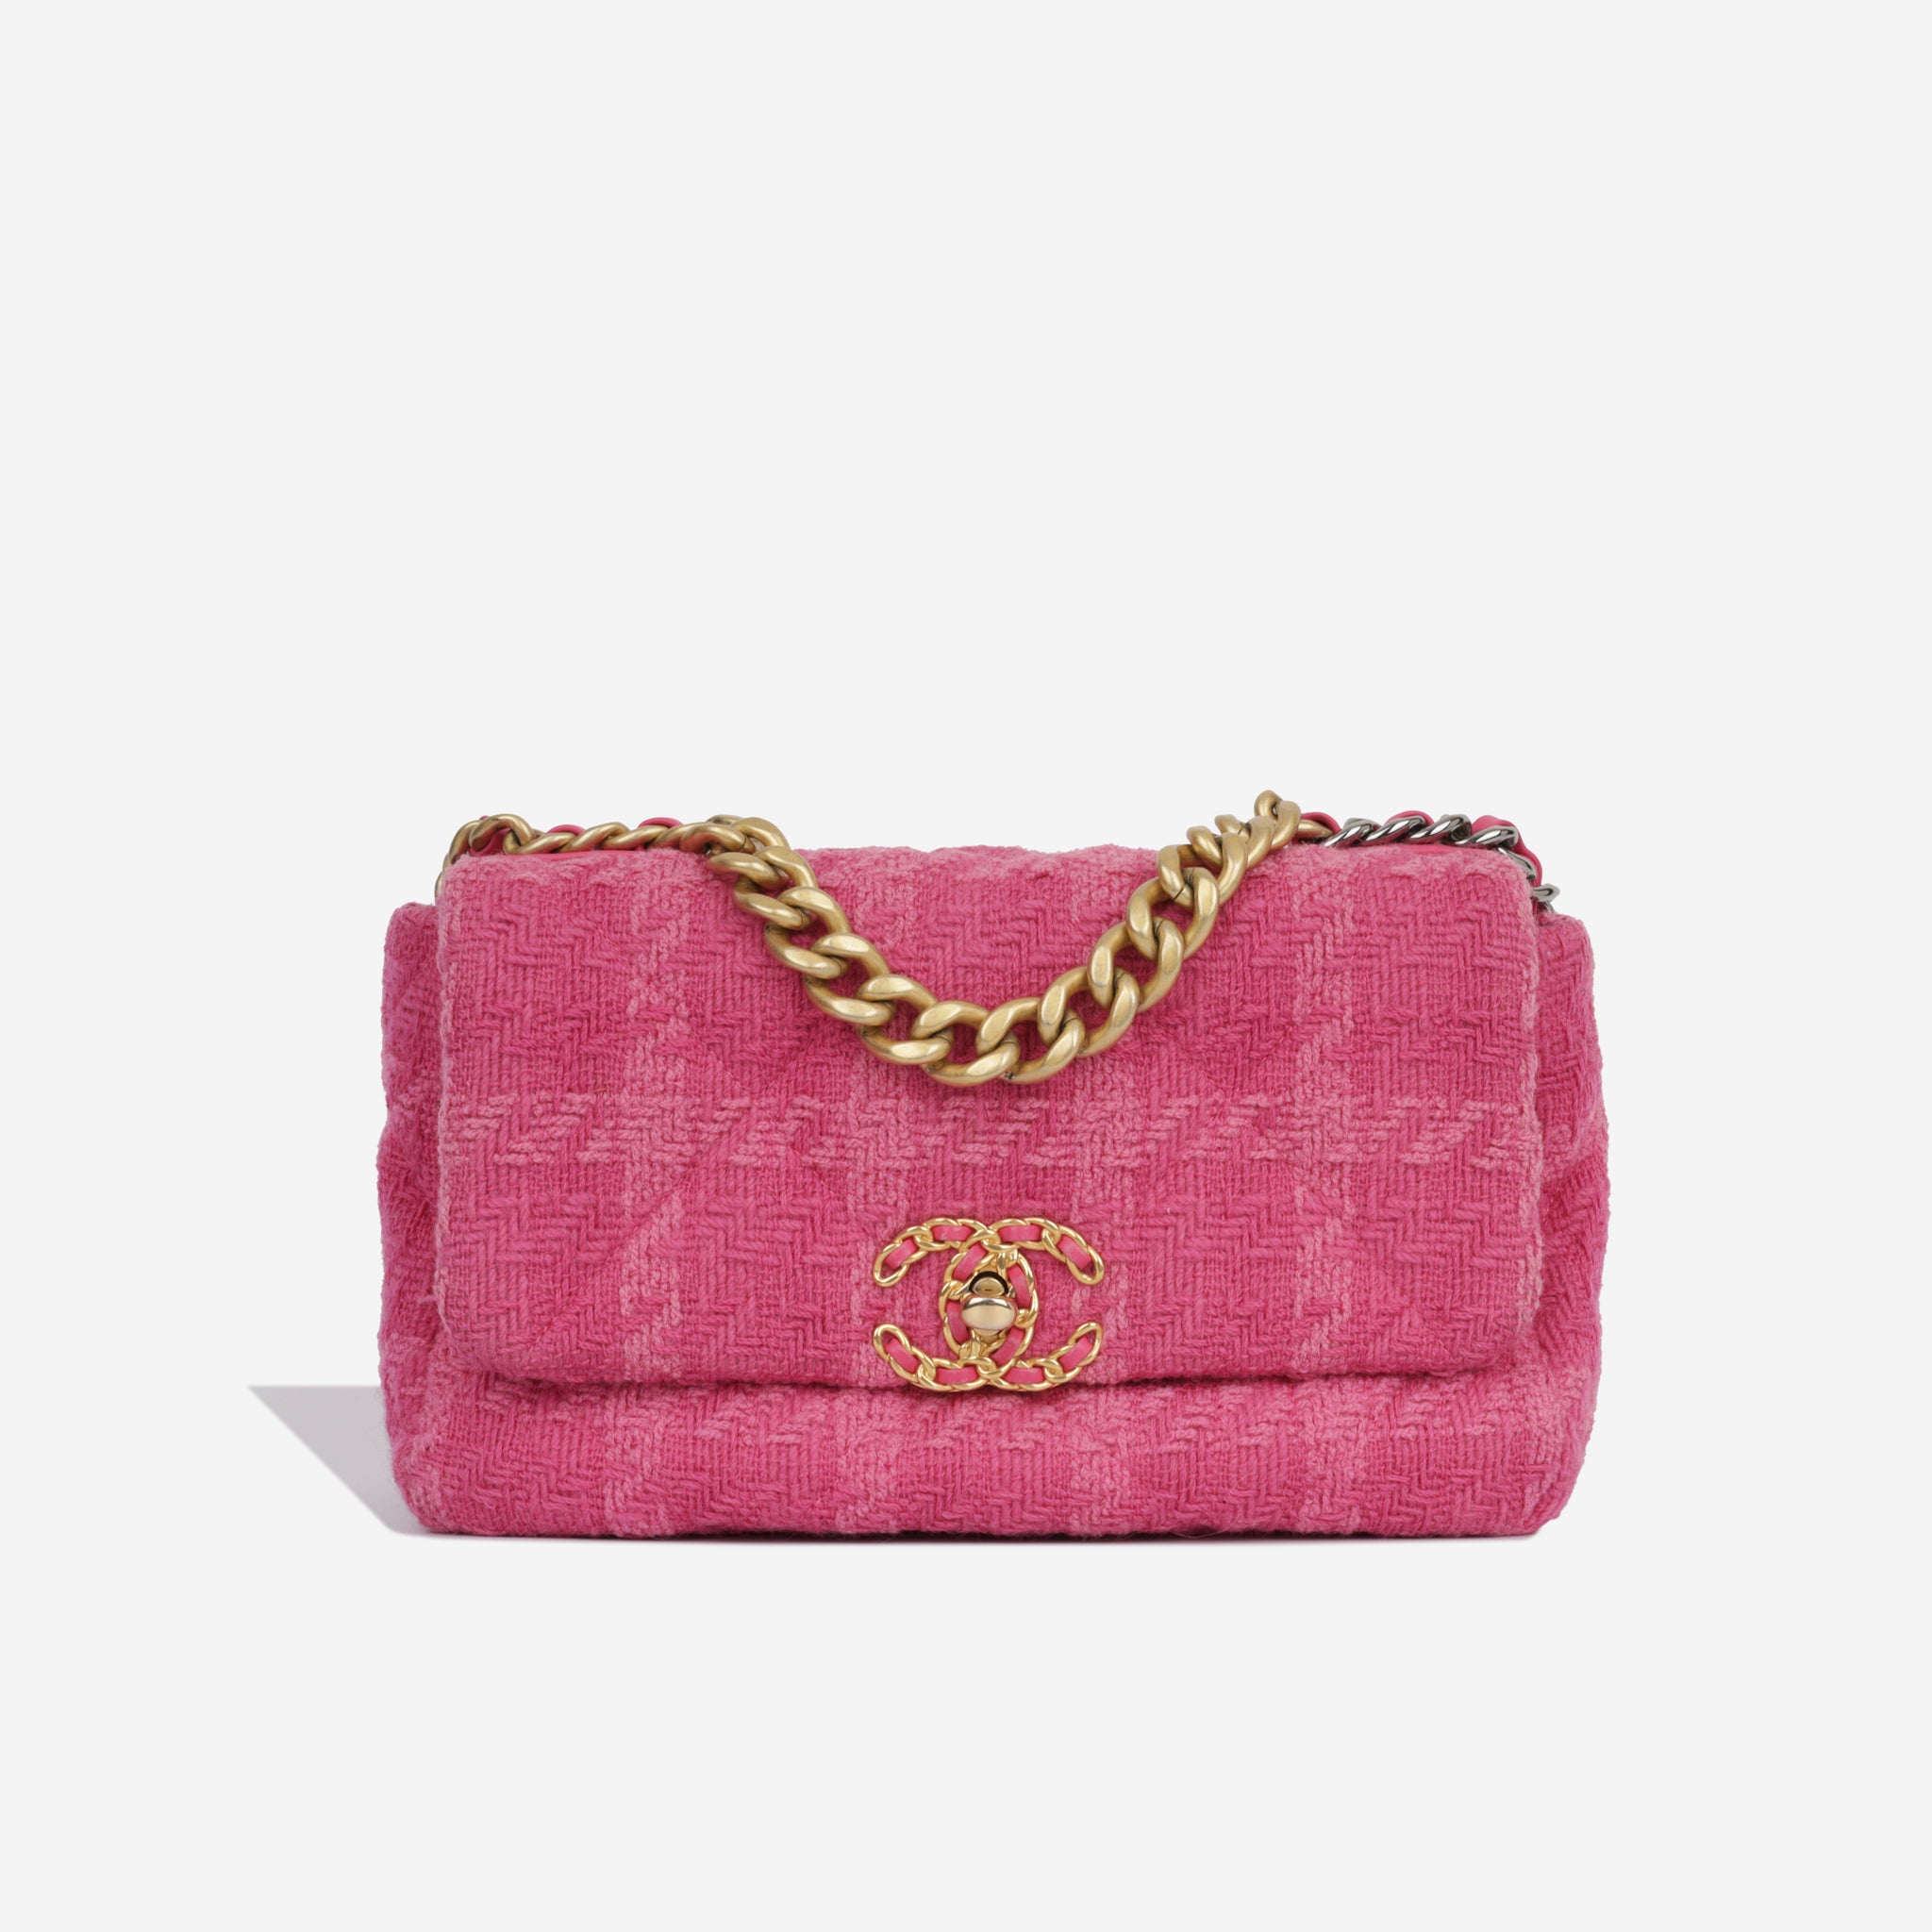 Chanel - Chanel 19 Flap Bag - Small - Pink Tweed and Mixed Fabrics